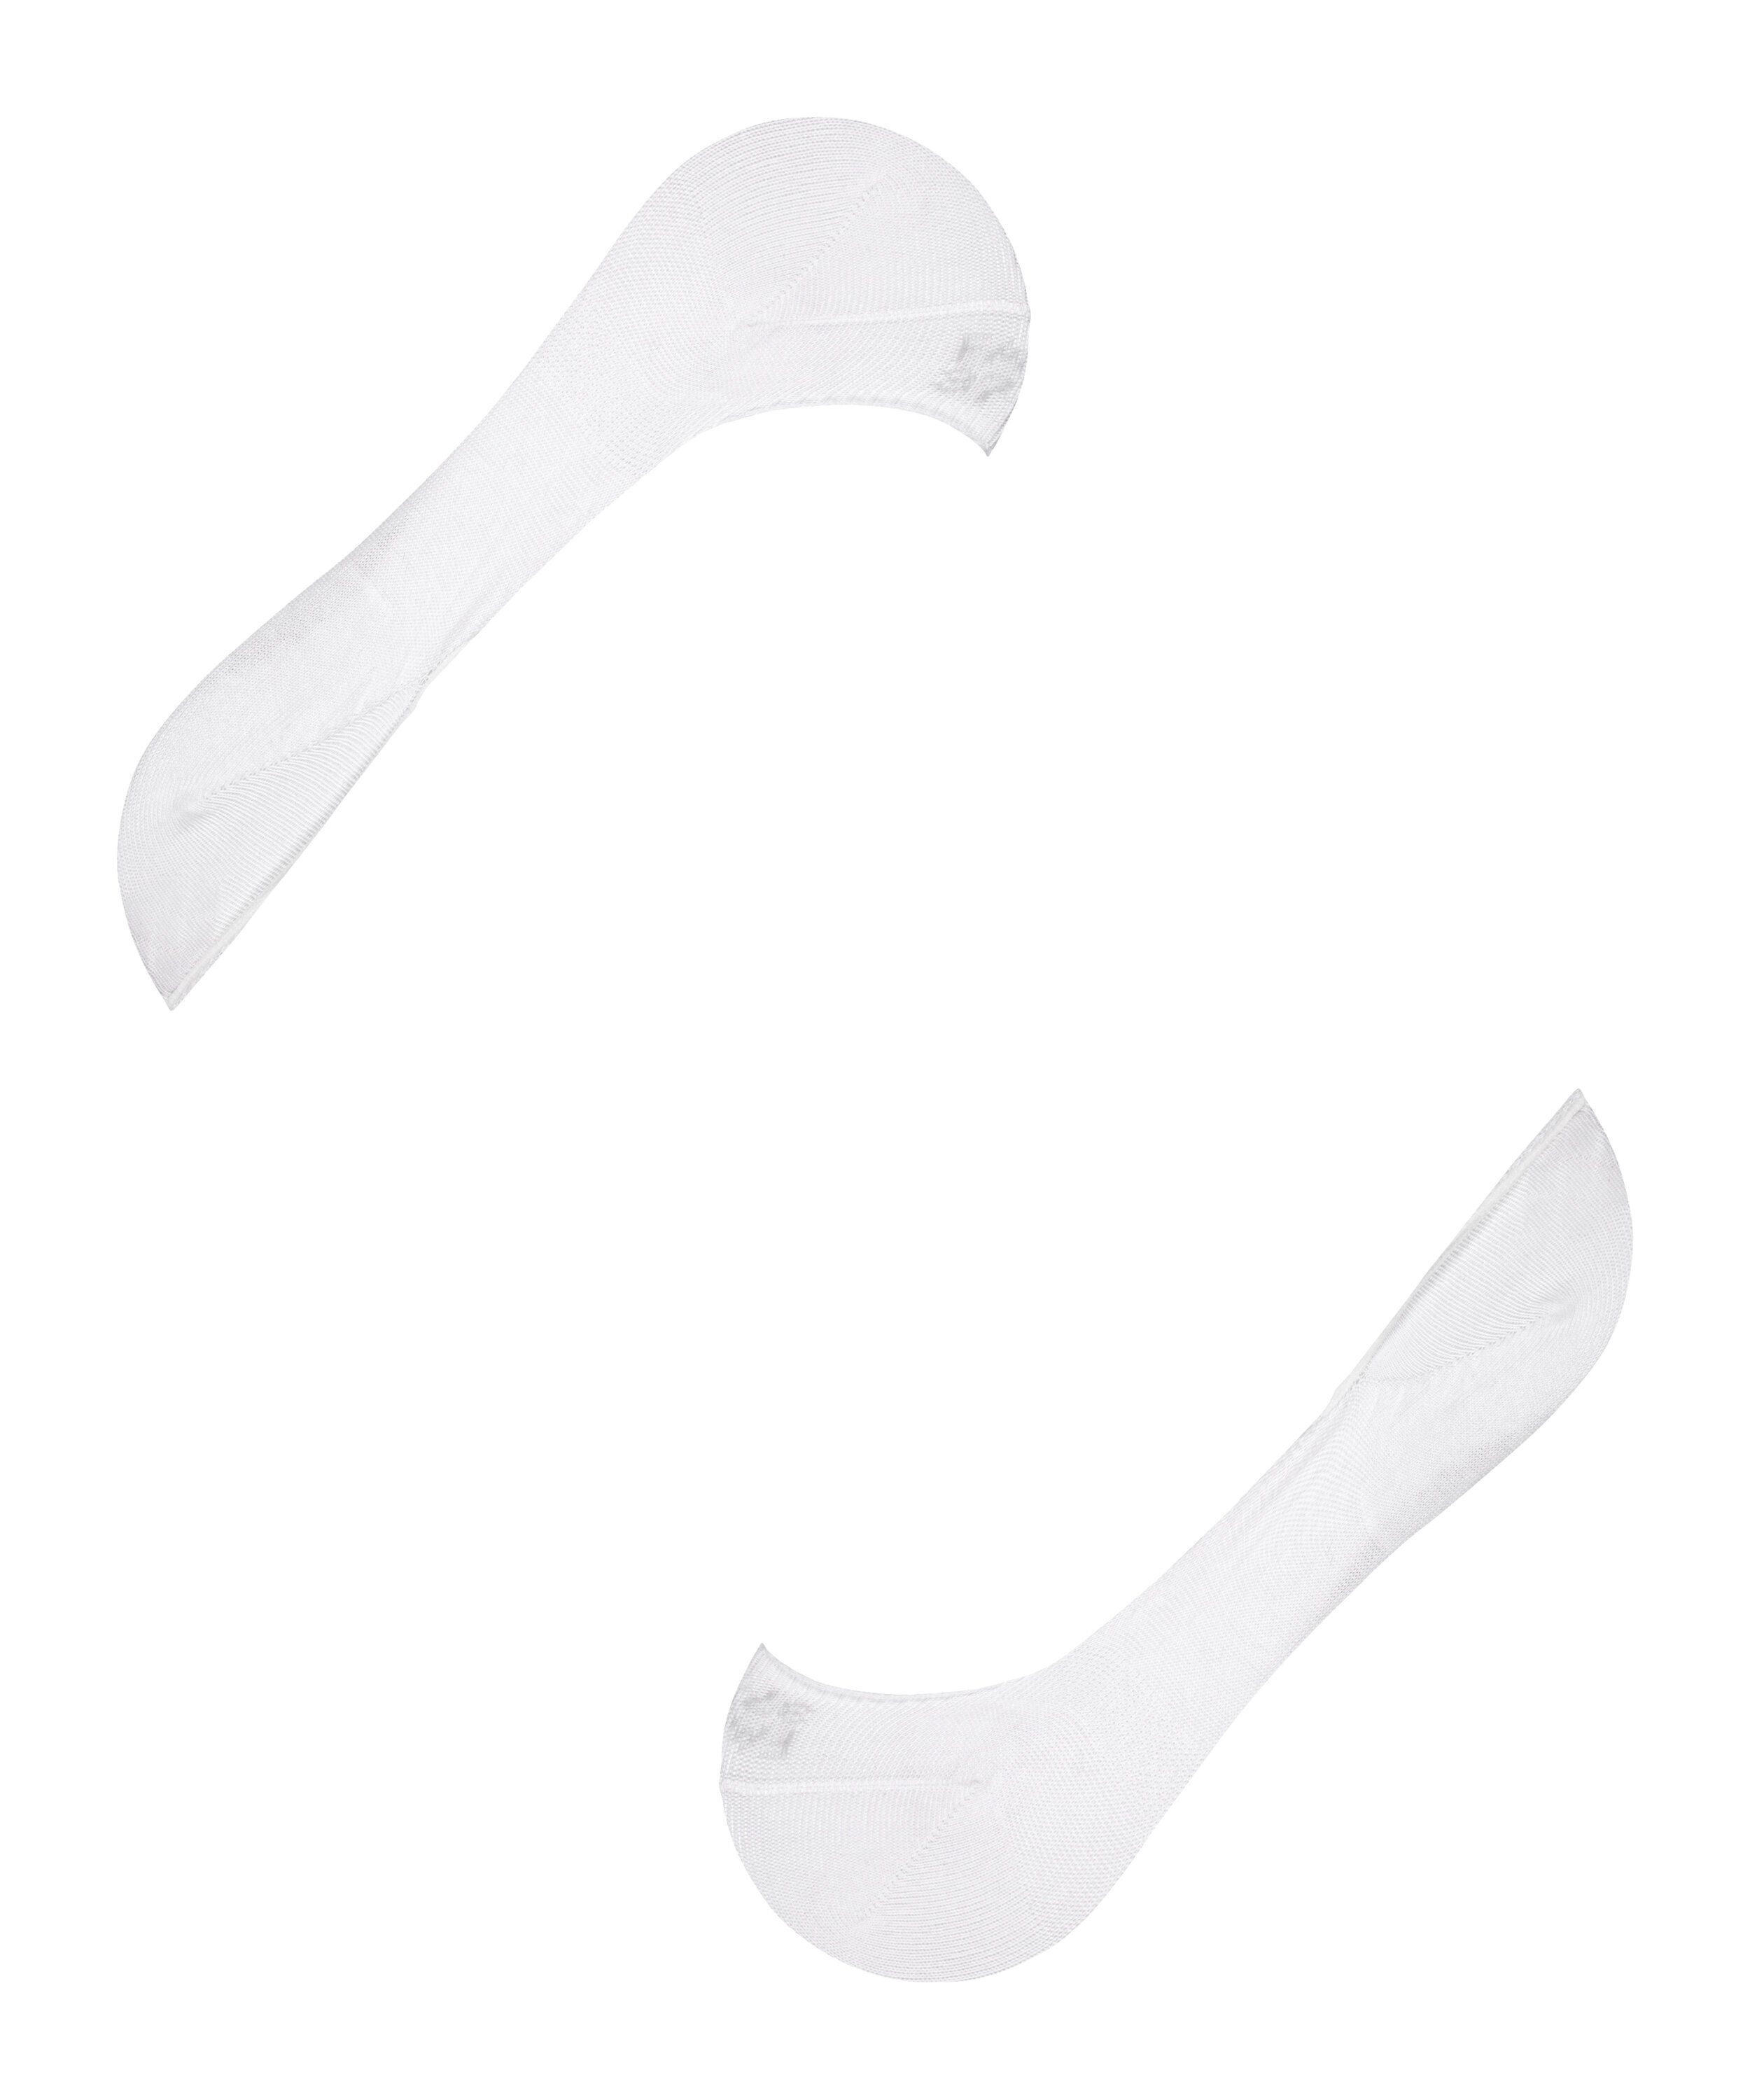 Cut mit Medium FALKE (2000) white Step Anti-Slip-System Füßlinge Box